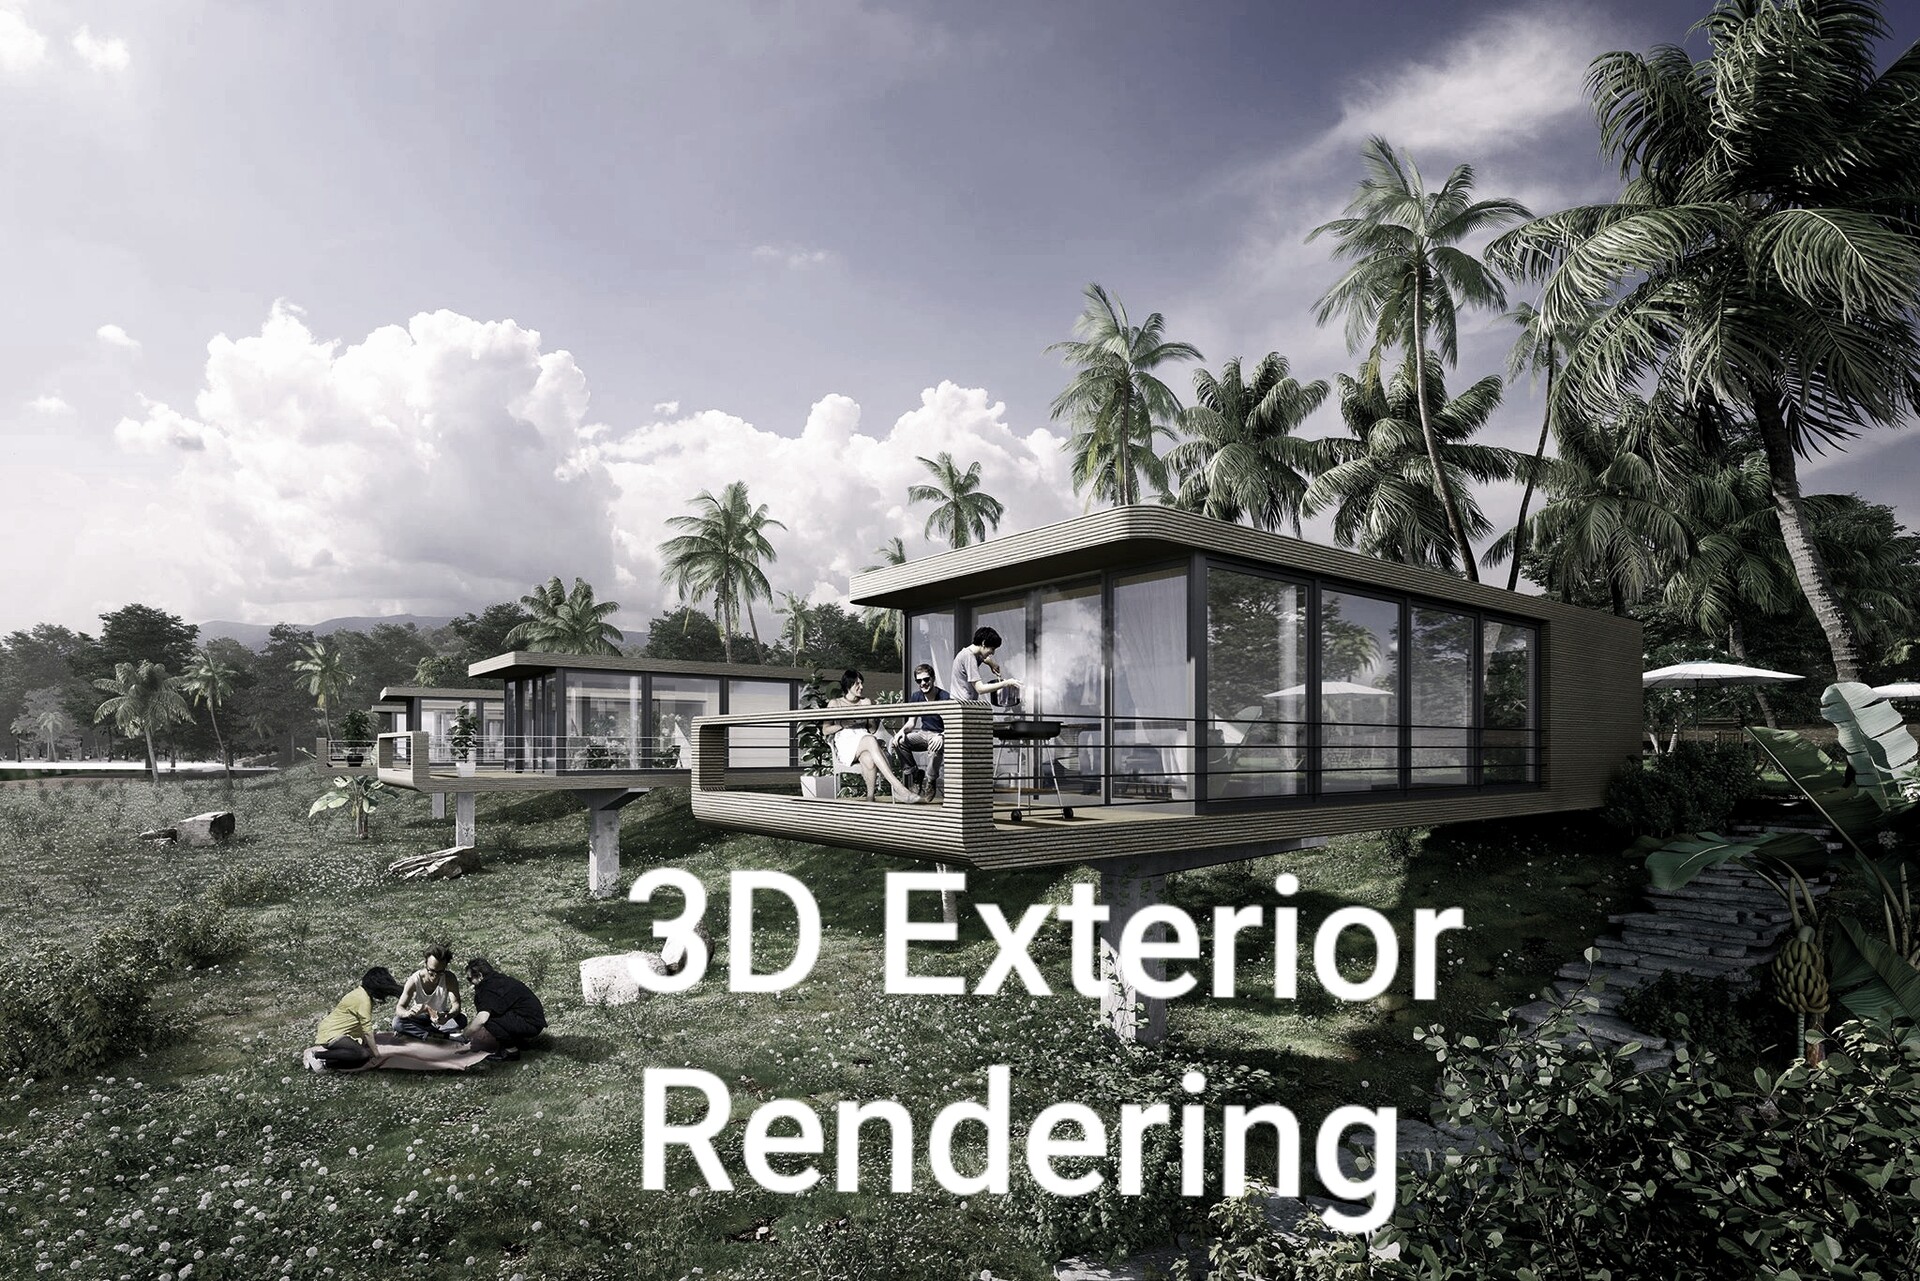 3D Exterior Rendering for Real Estate Marketing